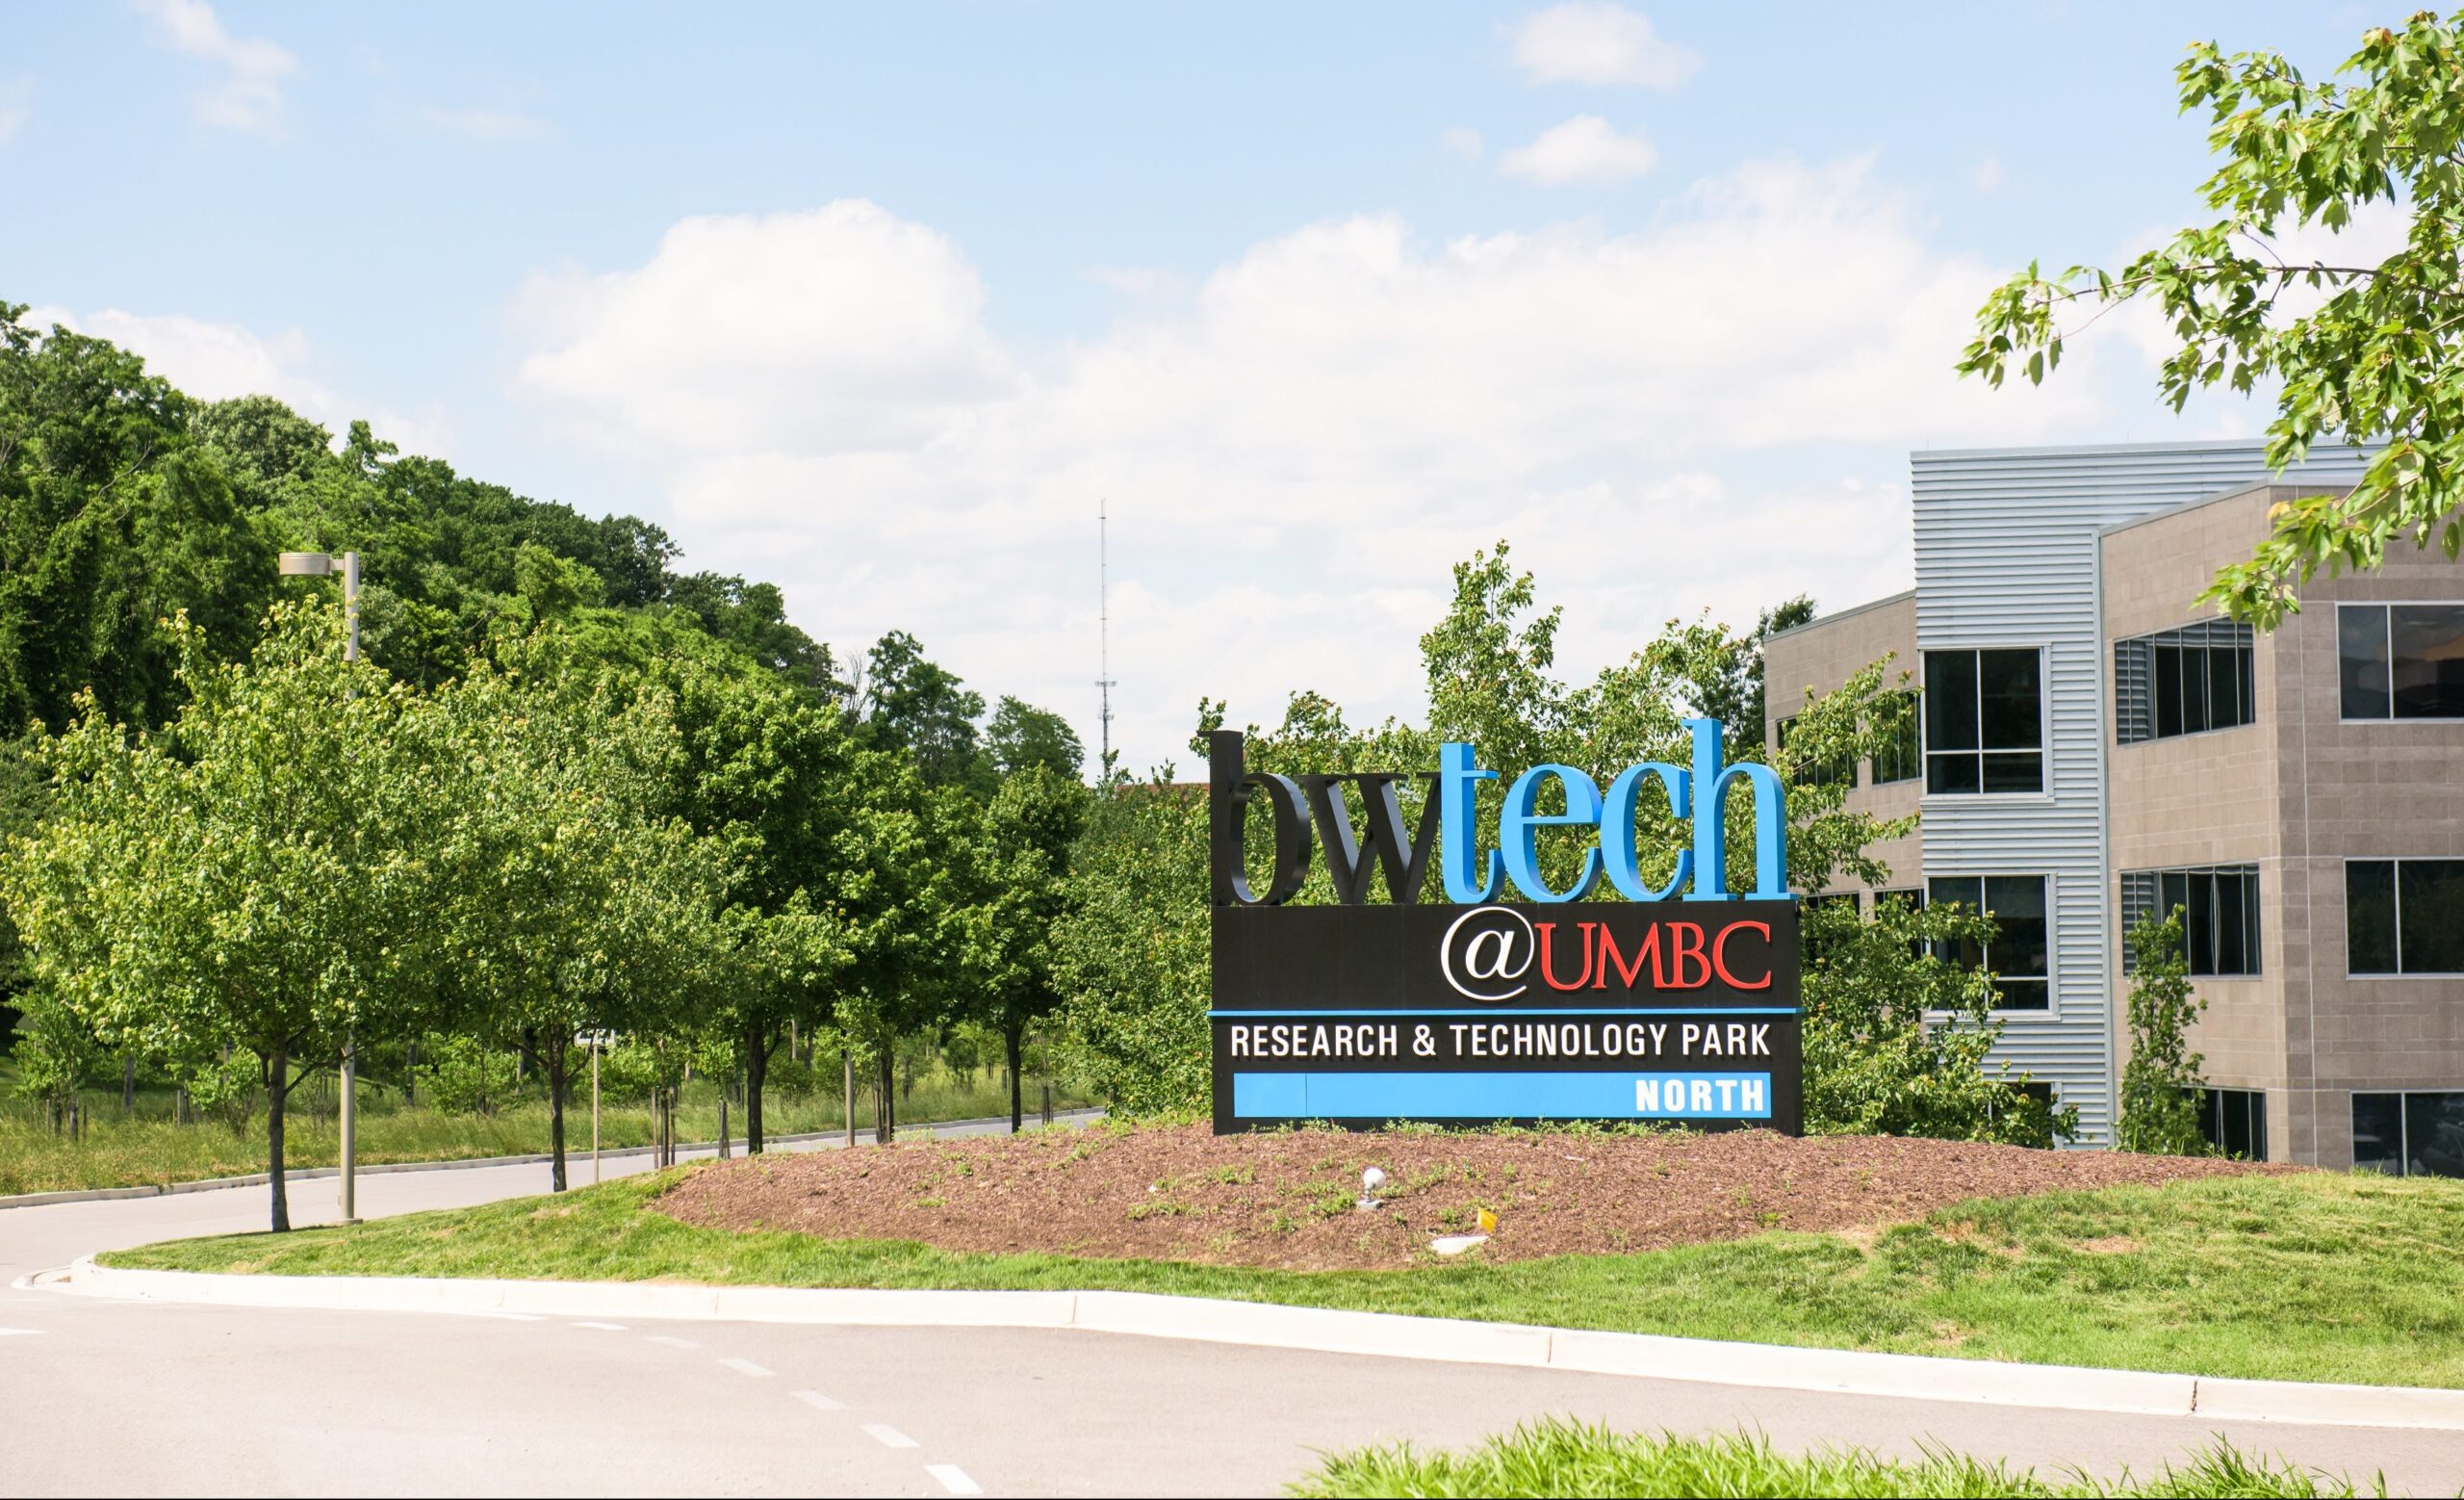 bwtech@UMBC to expand economic impact through RISE Zone designation